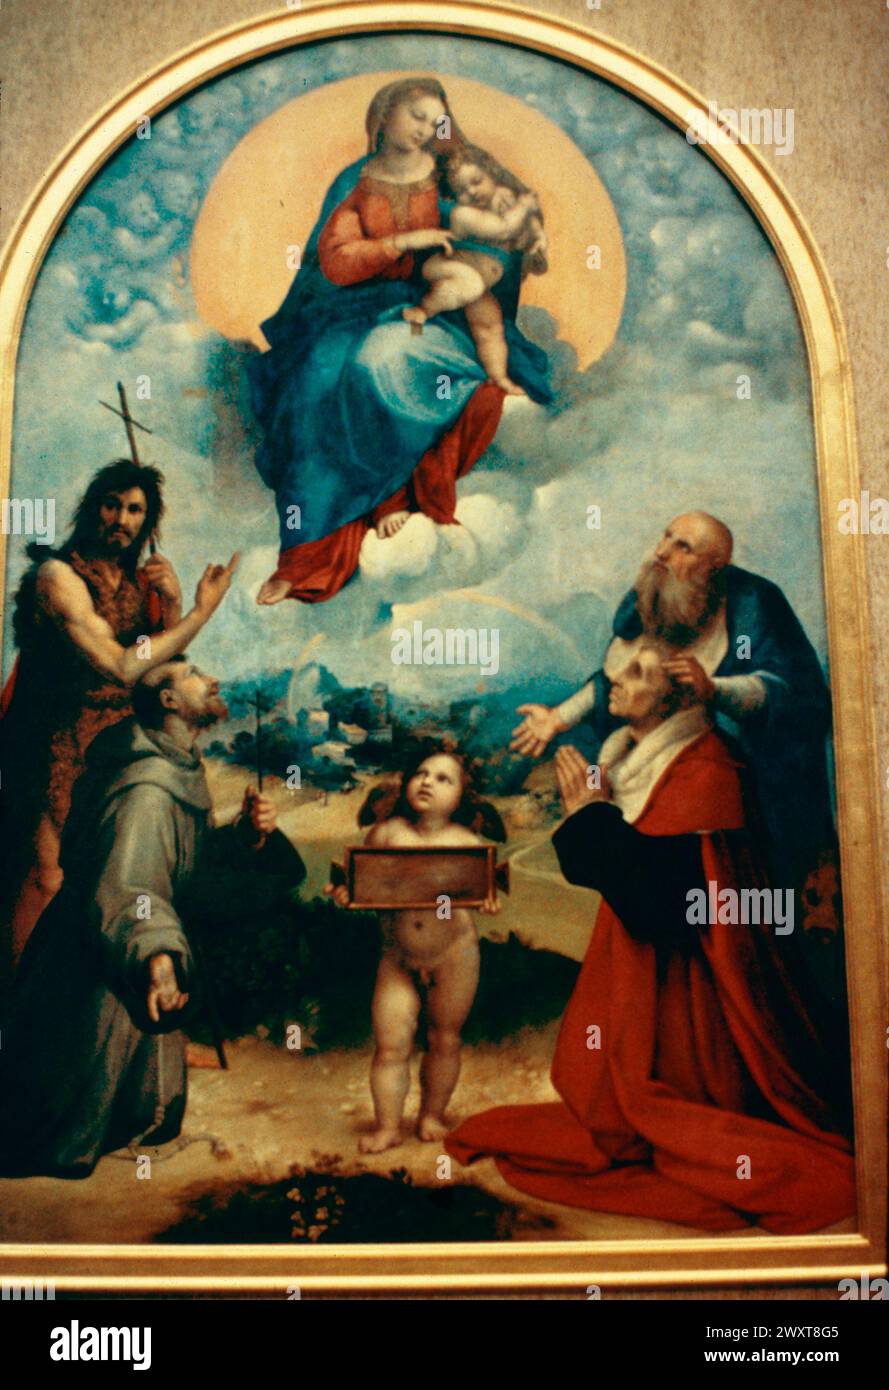 Foligno Madonna, painting by Italian artist Raphael, 16th century Stock Photo